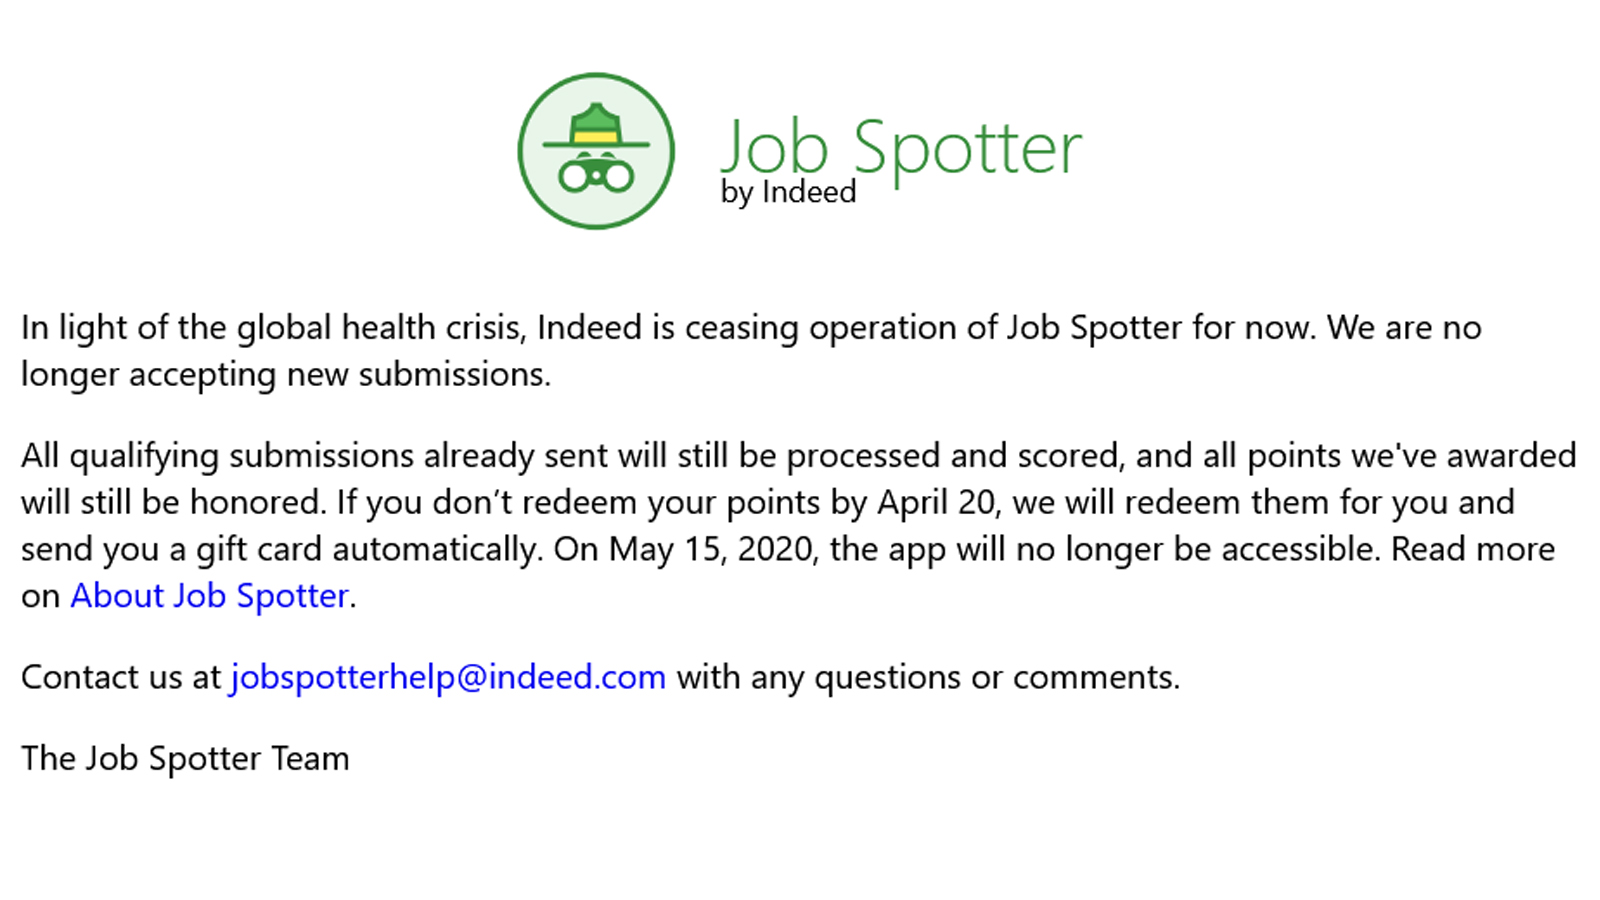 Find detailed information about Job Spotter